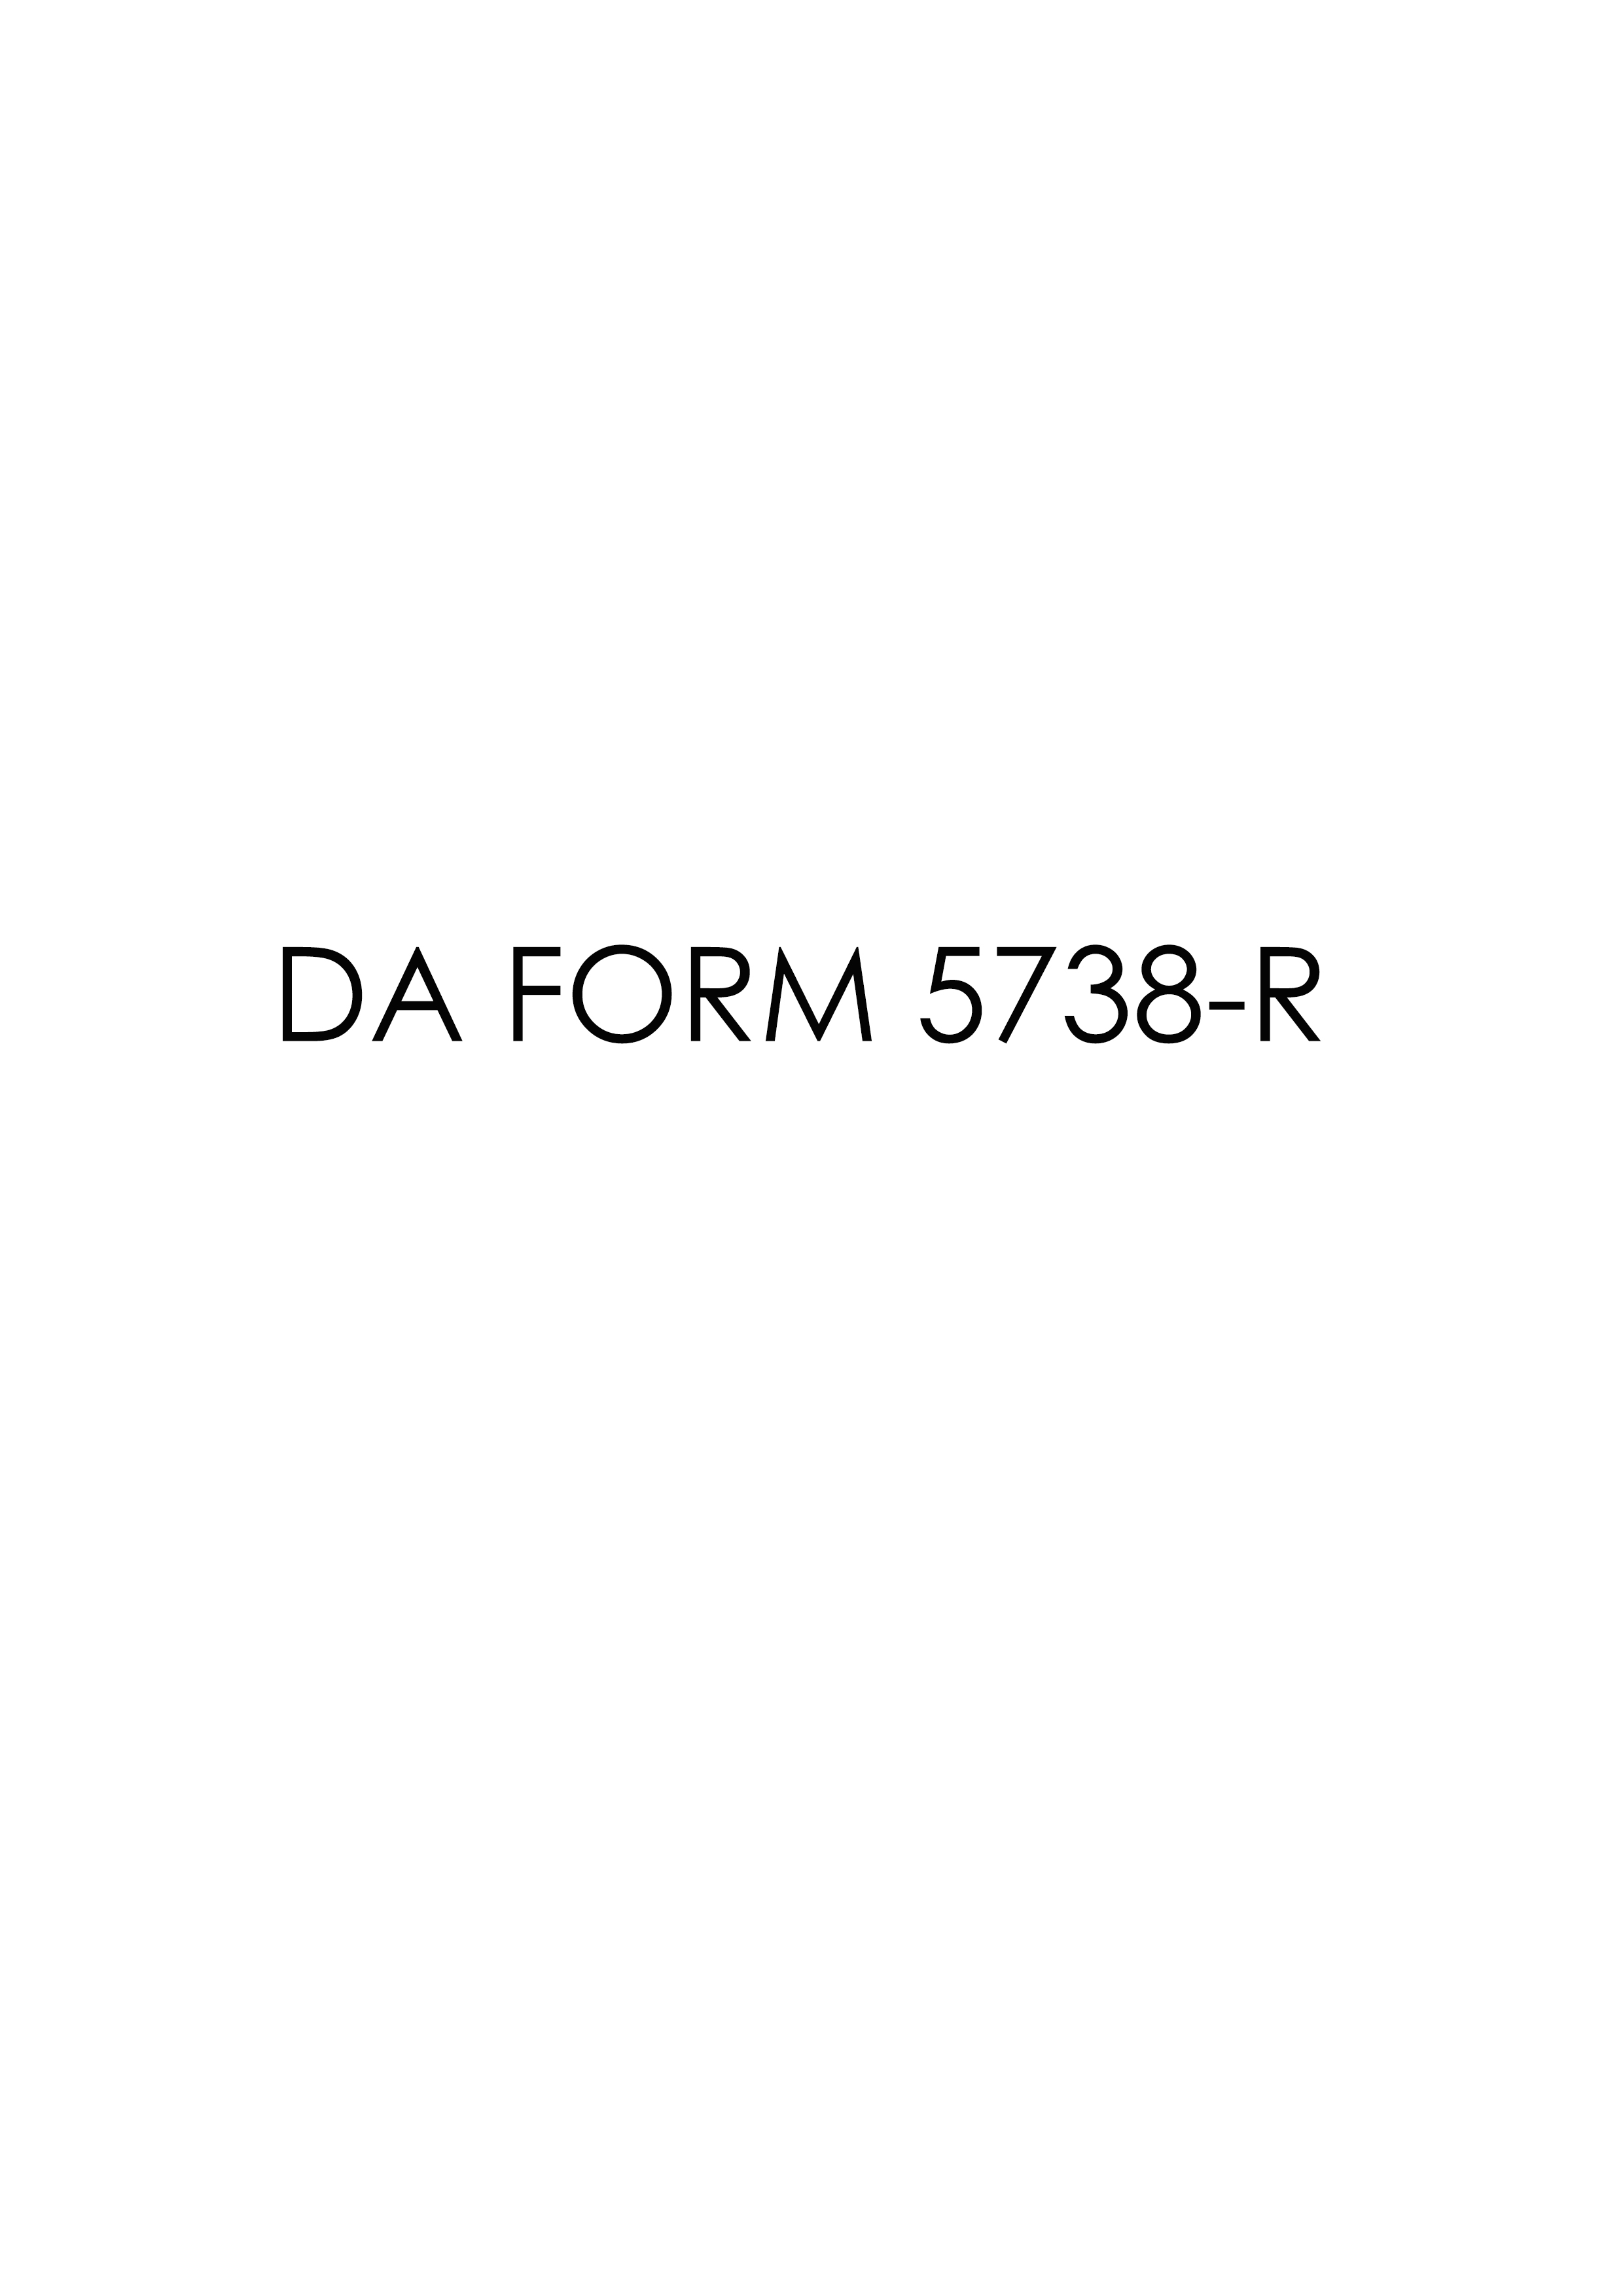 da Form 5738-R fillable